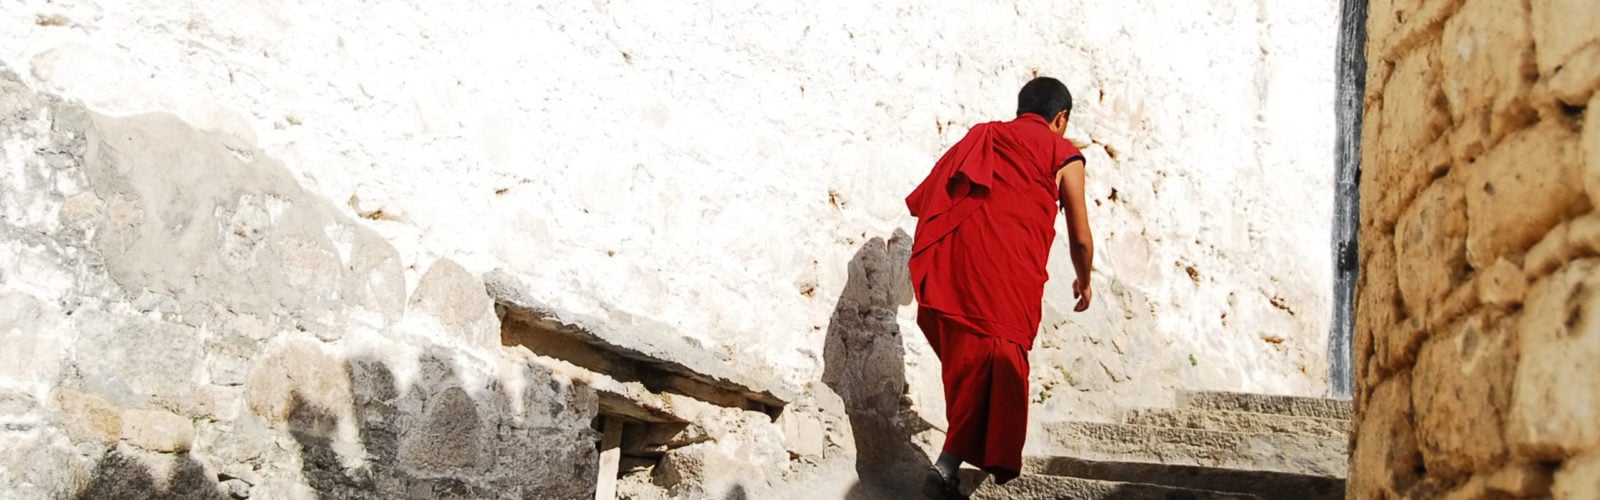 A Buddhist monk in Lhasa, Tibet